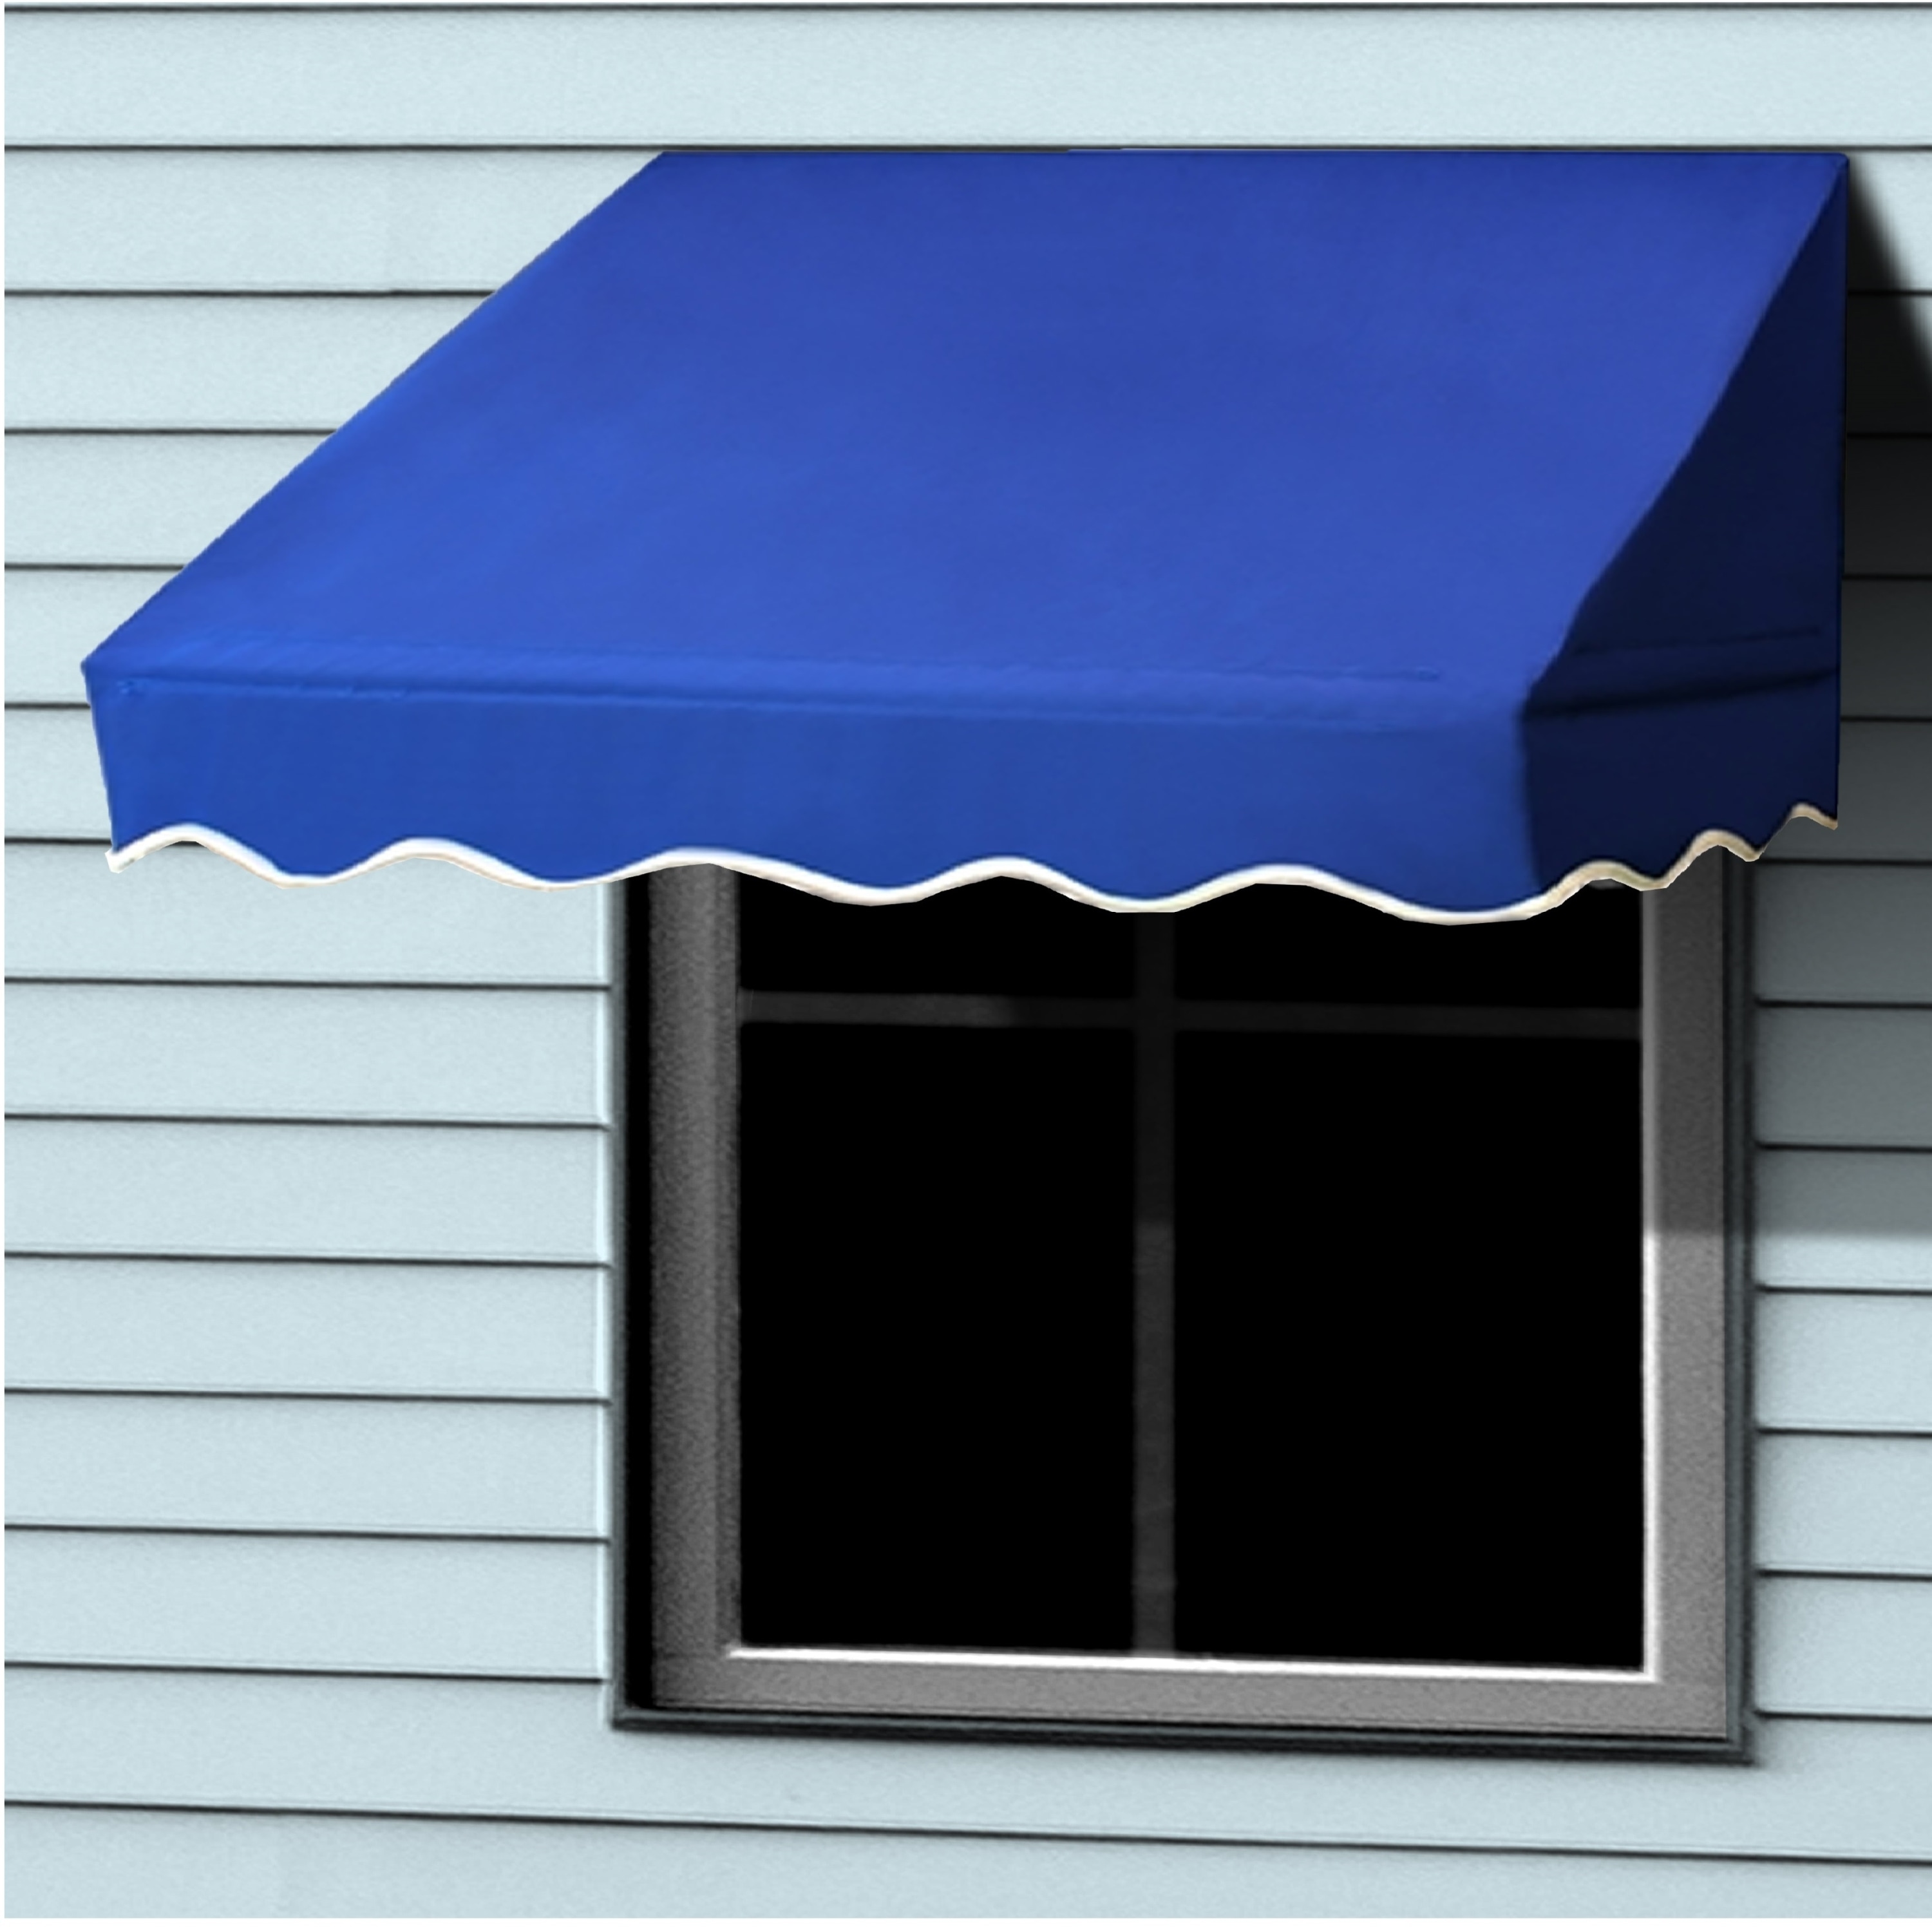 6 feet x 2 feet Blue Aleko Window Awning Door Canopy Decorator Free Ship New 